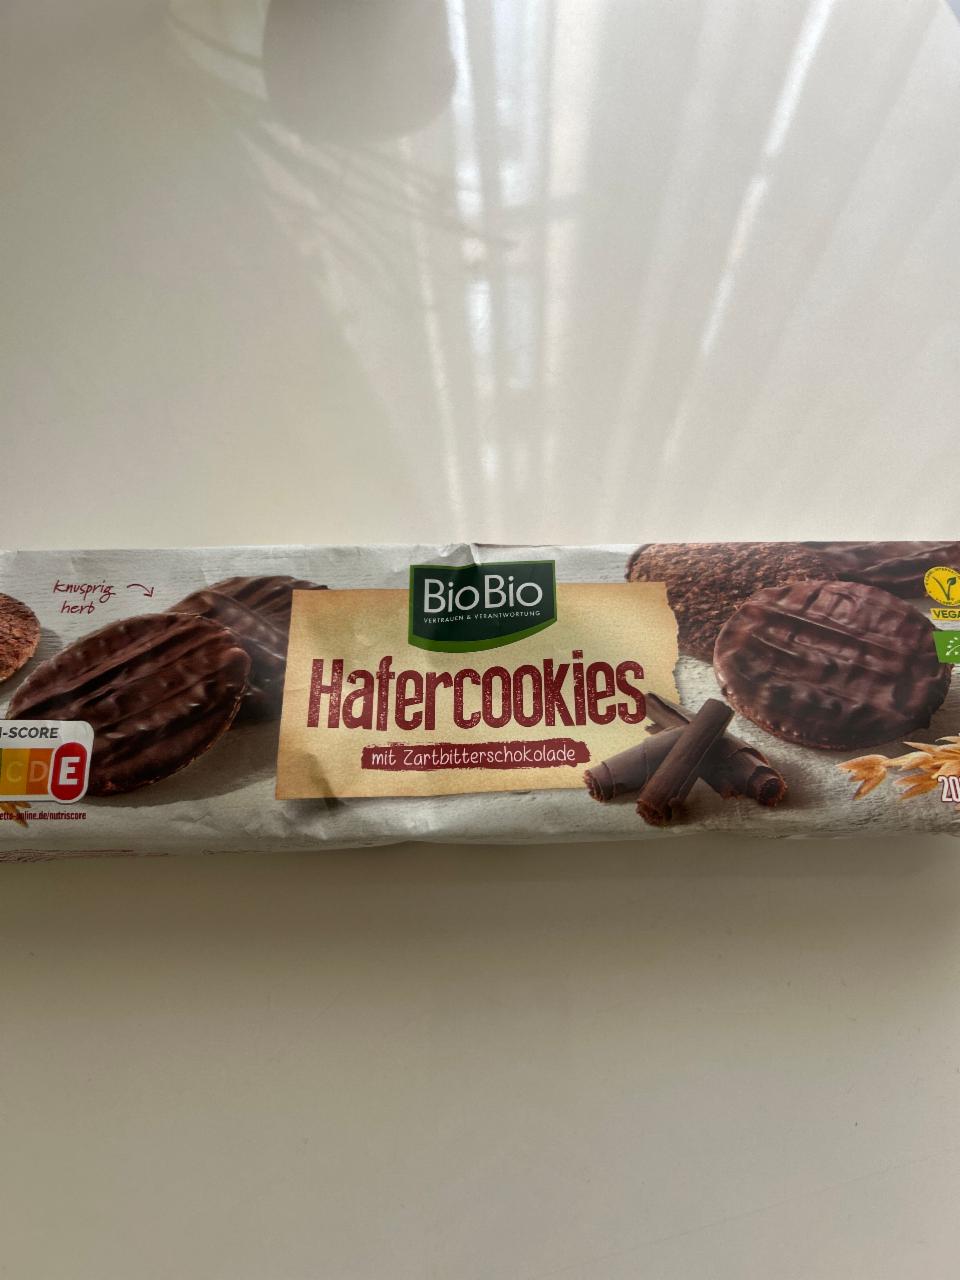 Фото - Hafercookies mit Zartbitterschokolade BioBio